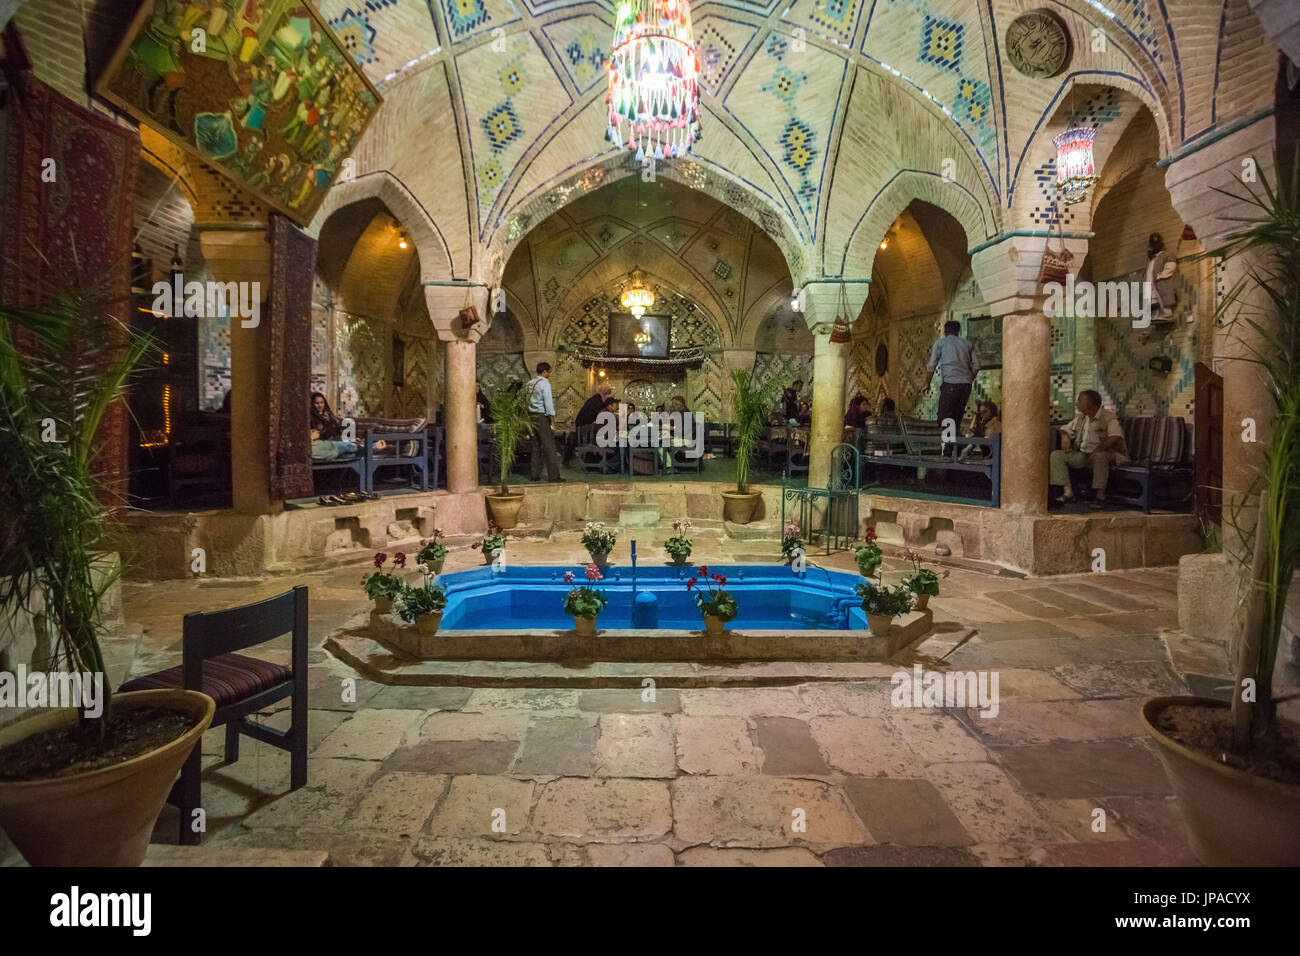 Iran, Kerman City, Kerman Bazaar, Old Bath house turned into a restaurant Stock Photo